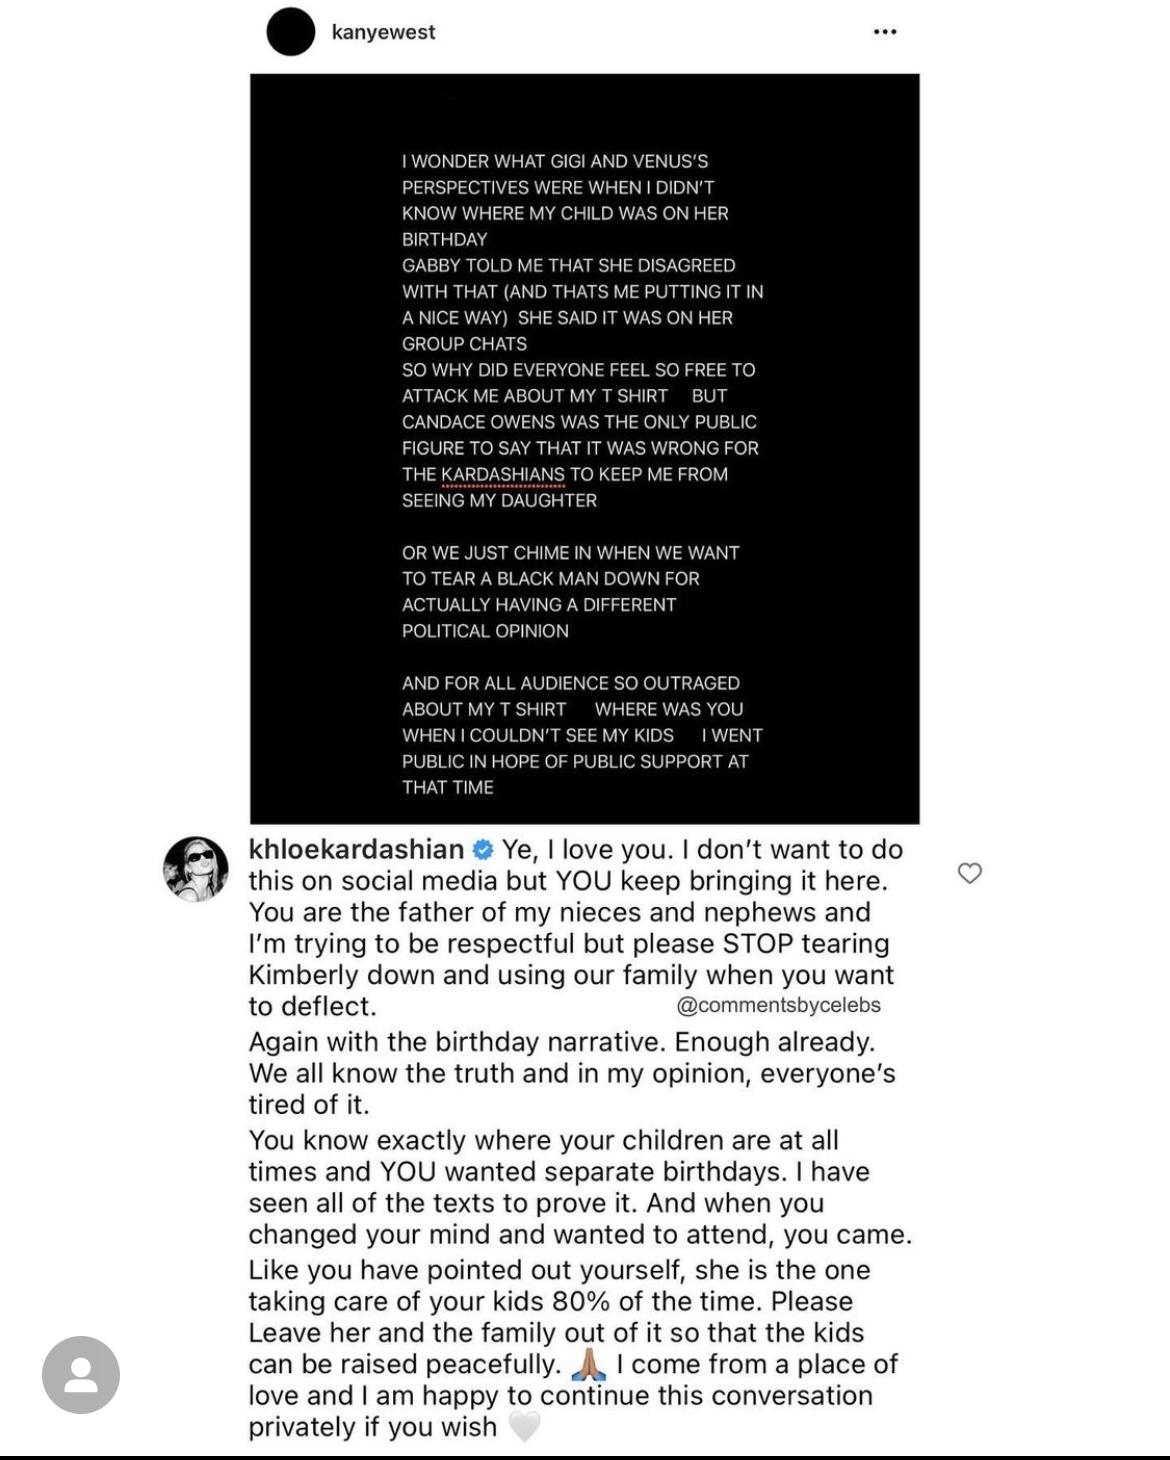 Khloe Kardashian's comment on Kanye West's post